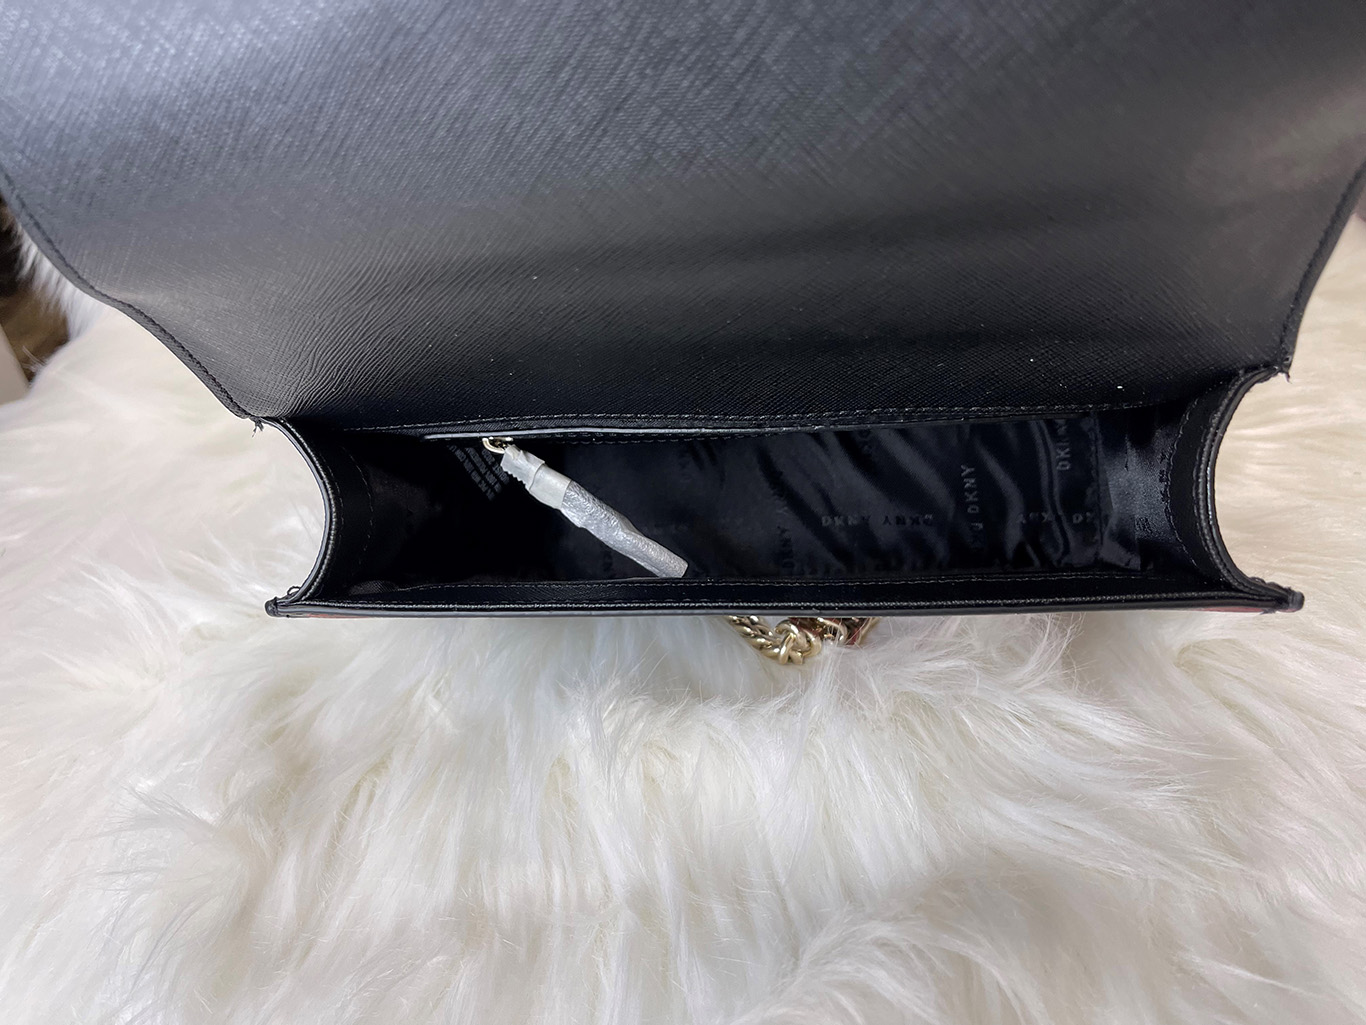 DKNY Elissa crossbody bag with lock charm detail